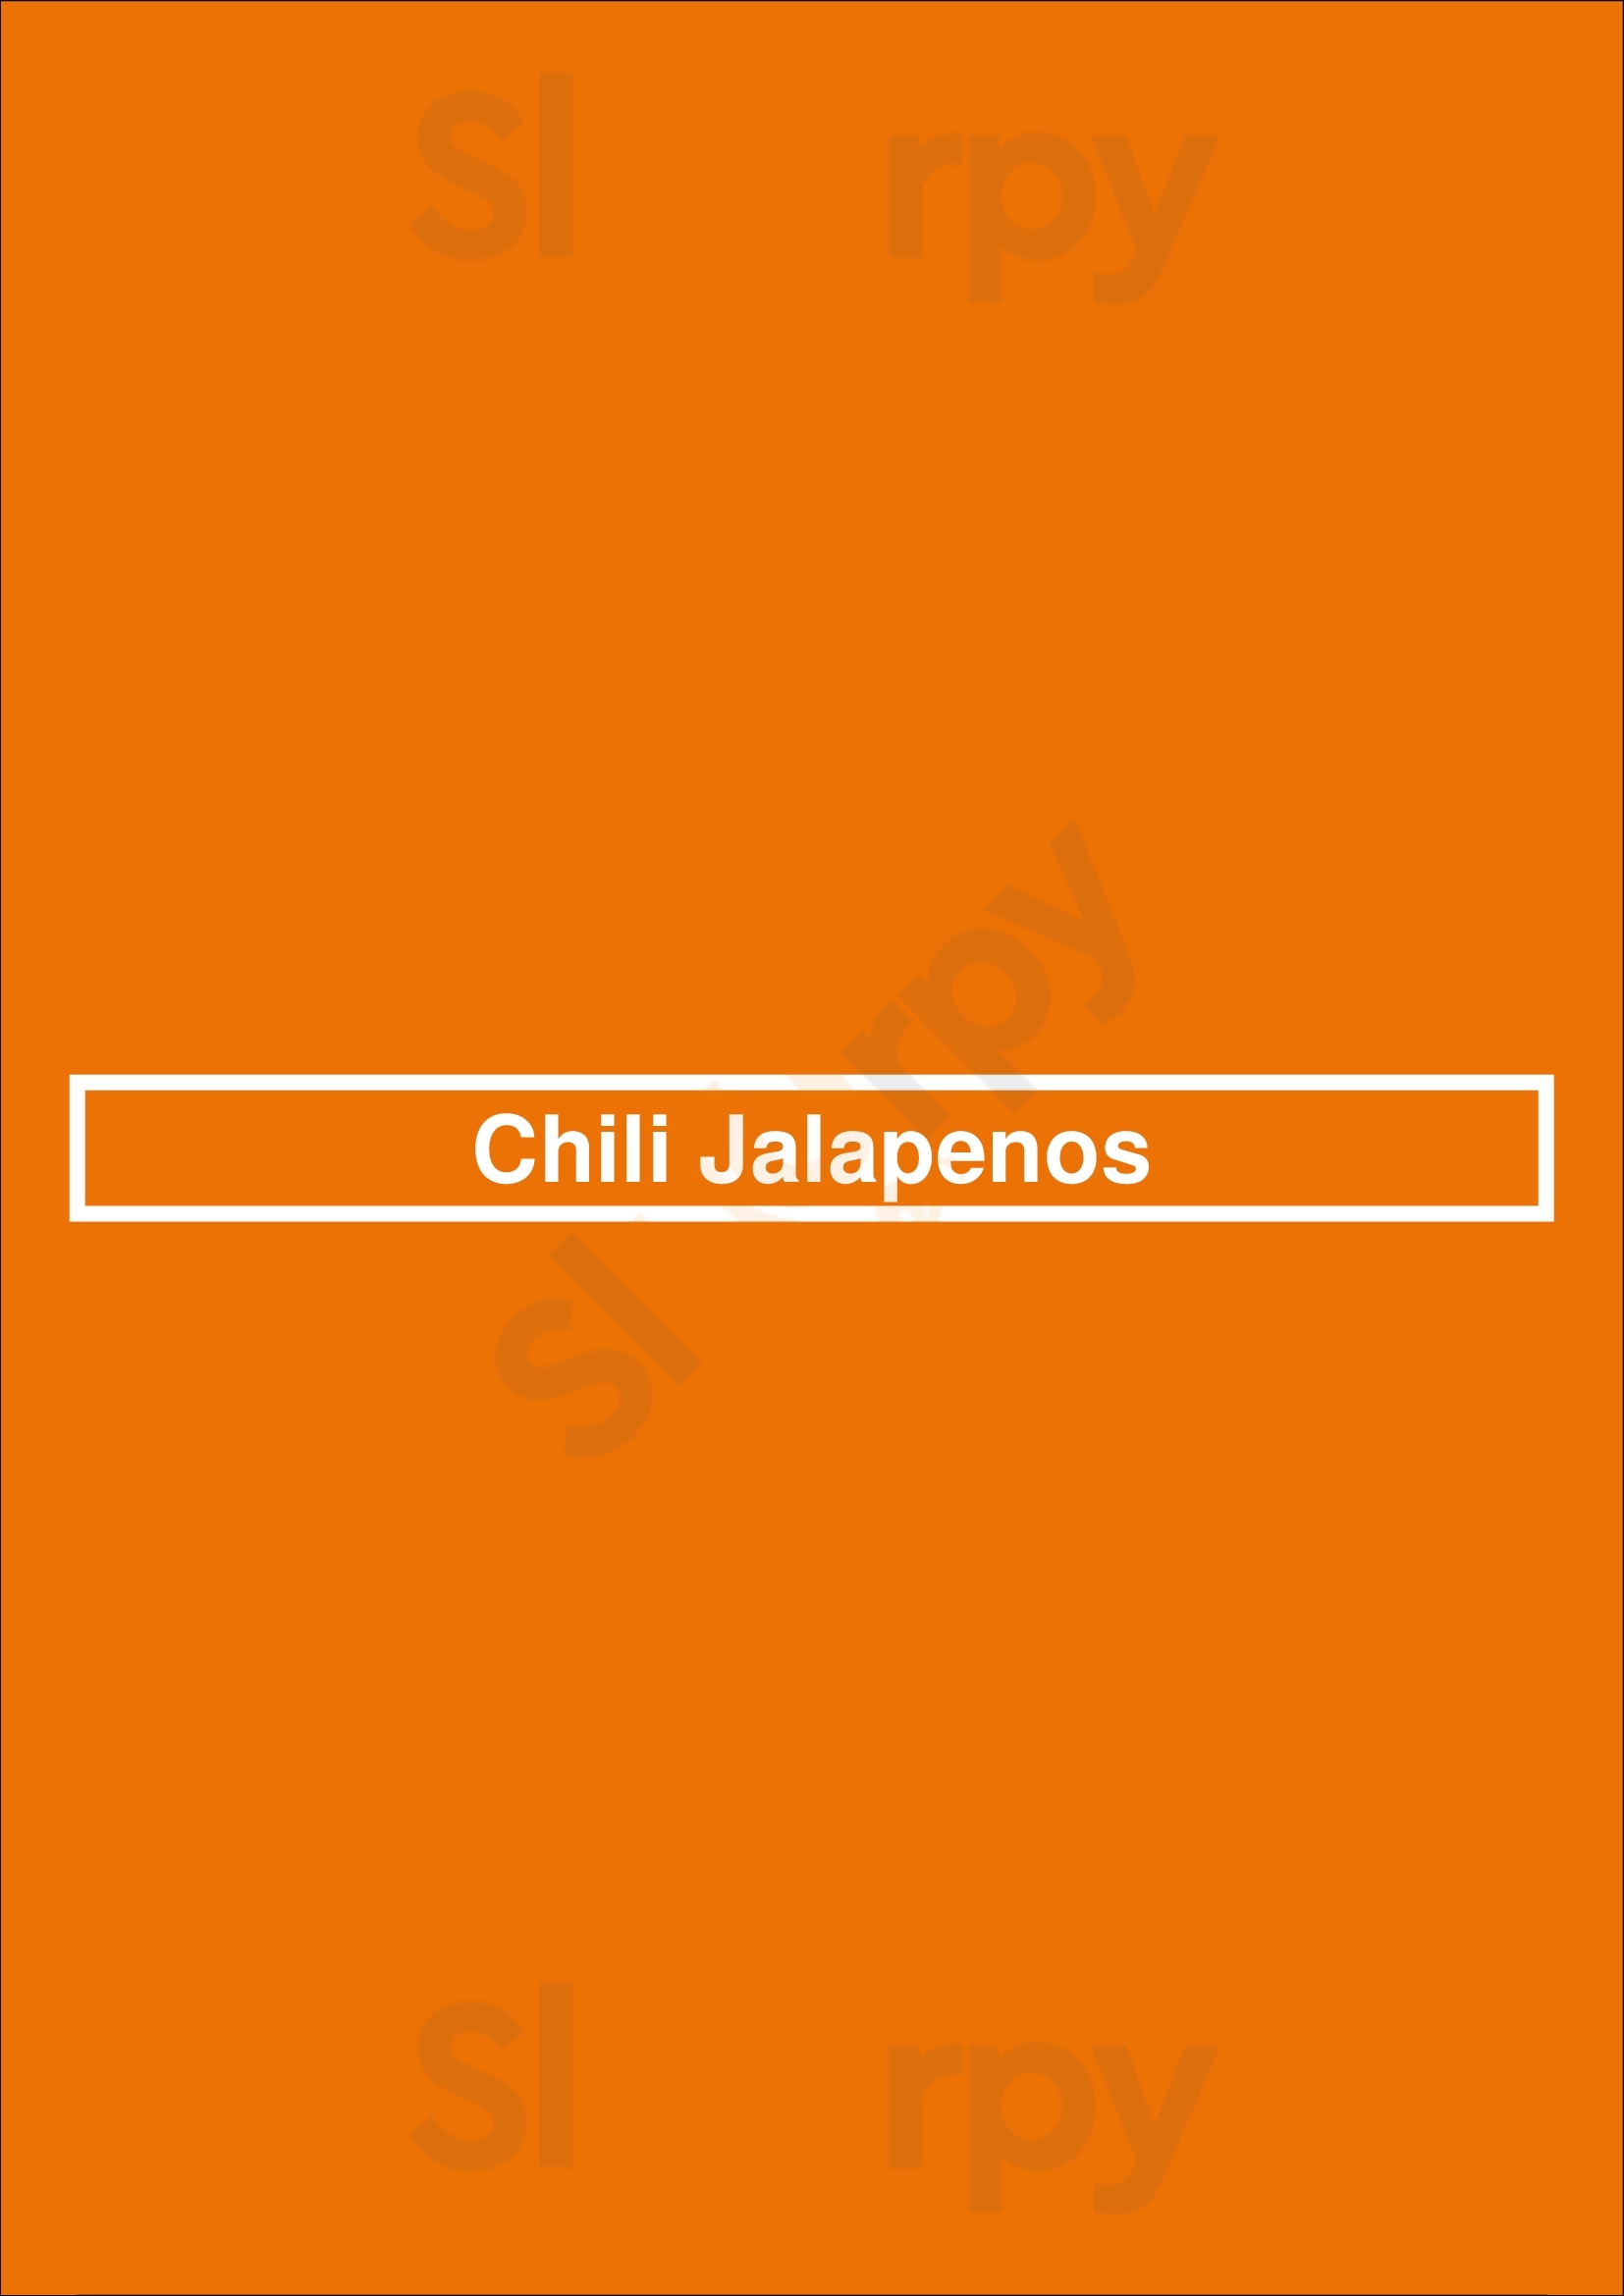 Chile Jalapeno Taqueria Oakland Menu - 1